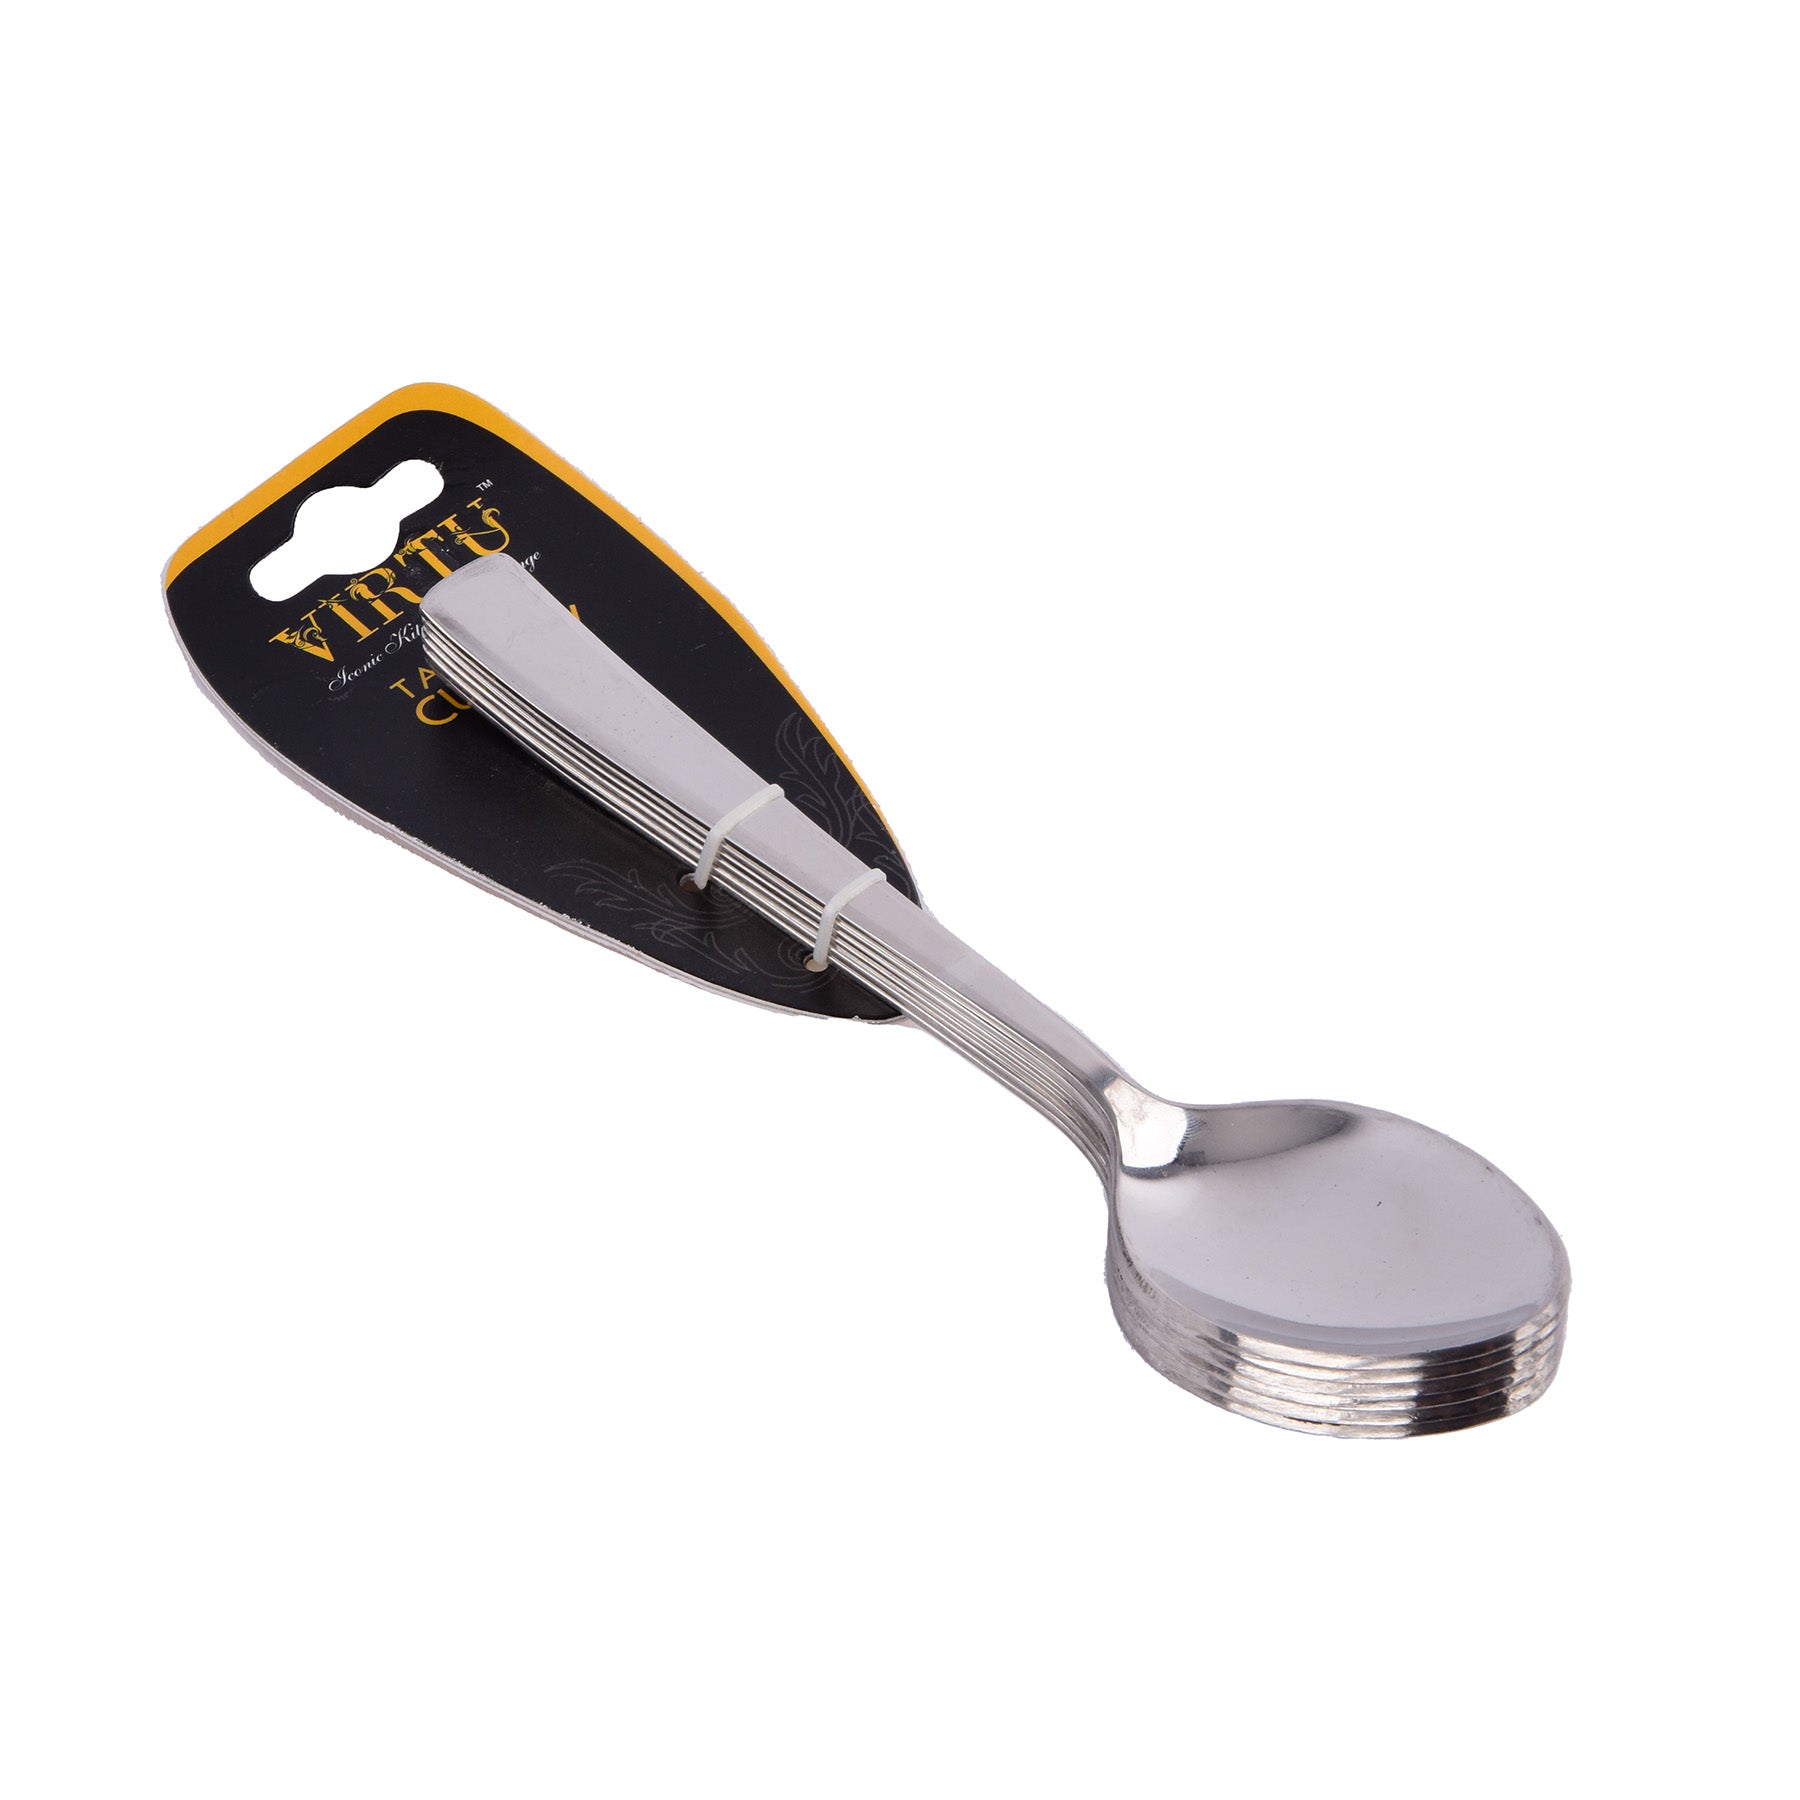 Elegant small spoon set